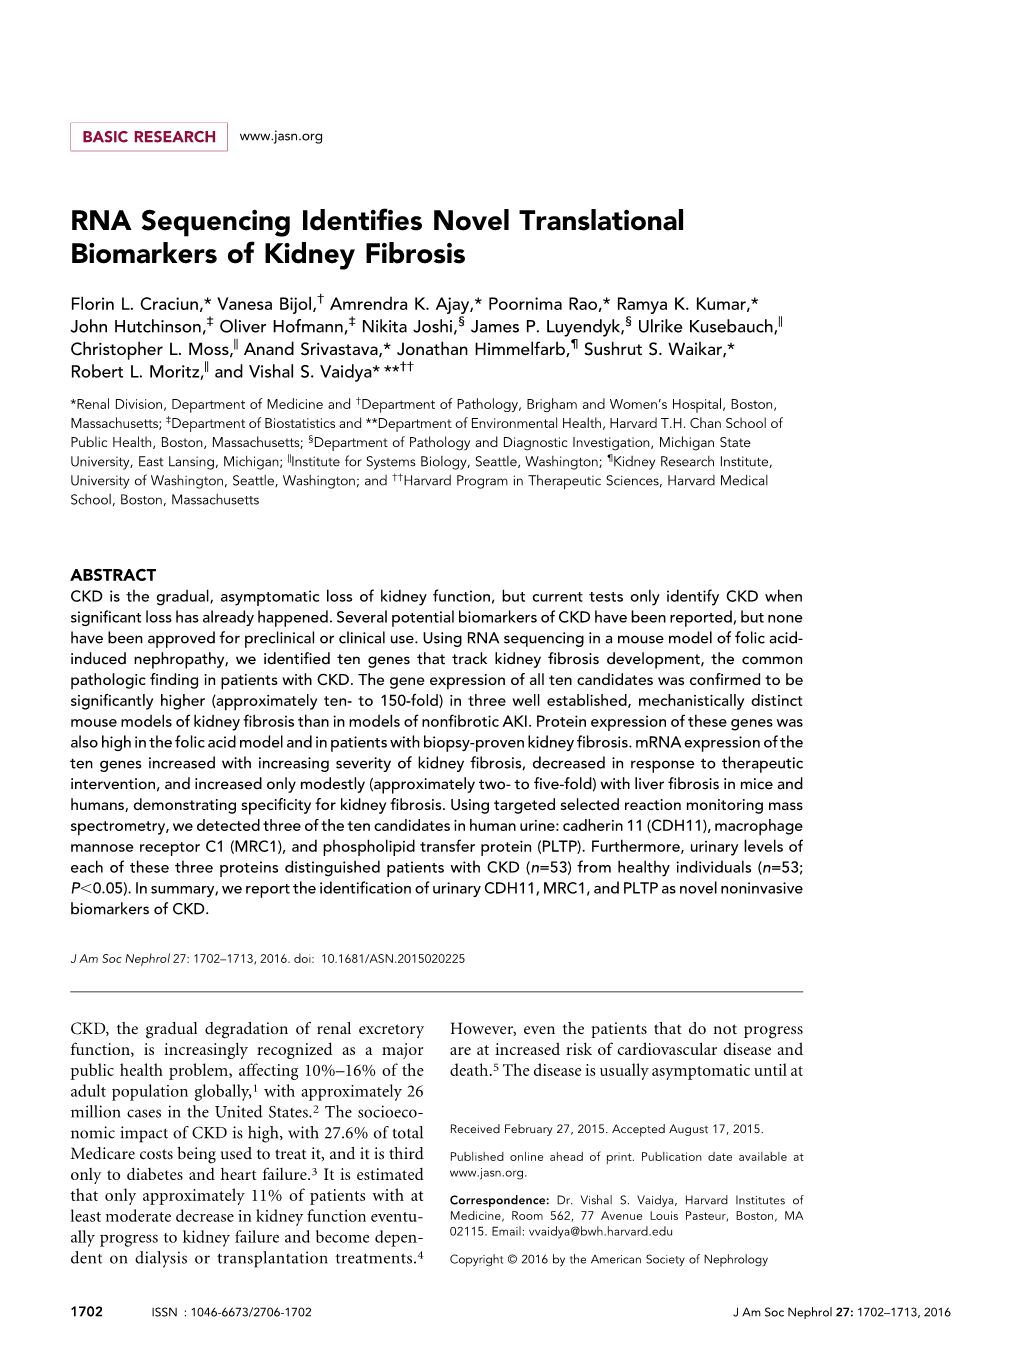 RNA Sequencing Identifies Novel Translational Biomarkers of Kidney